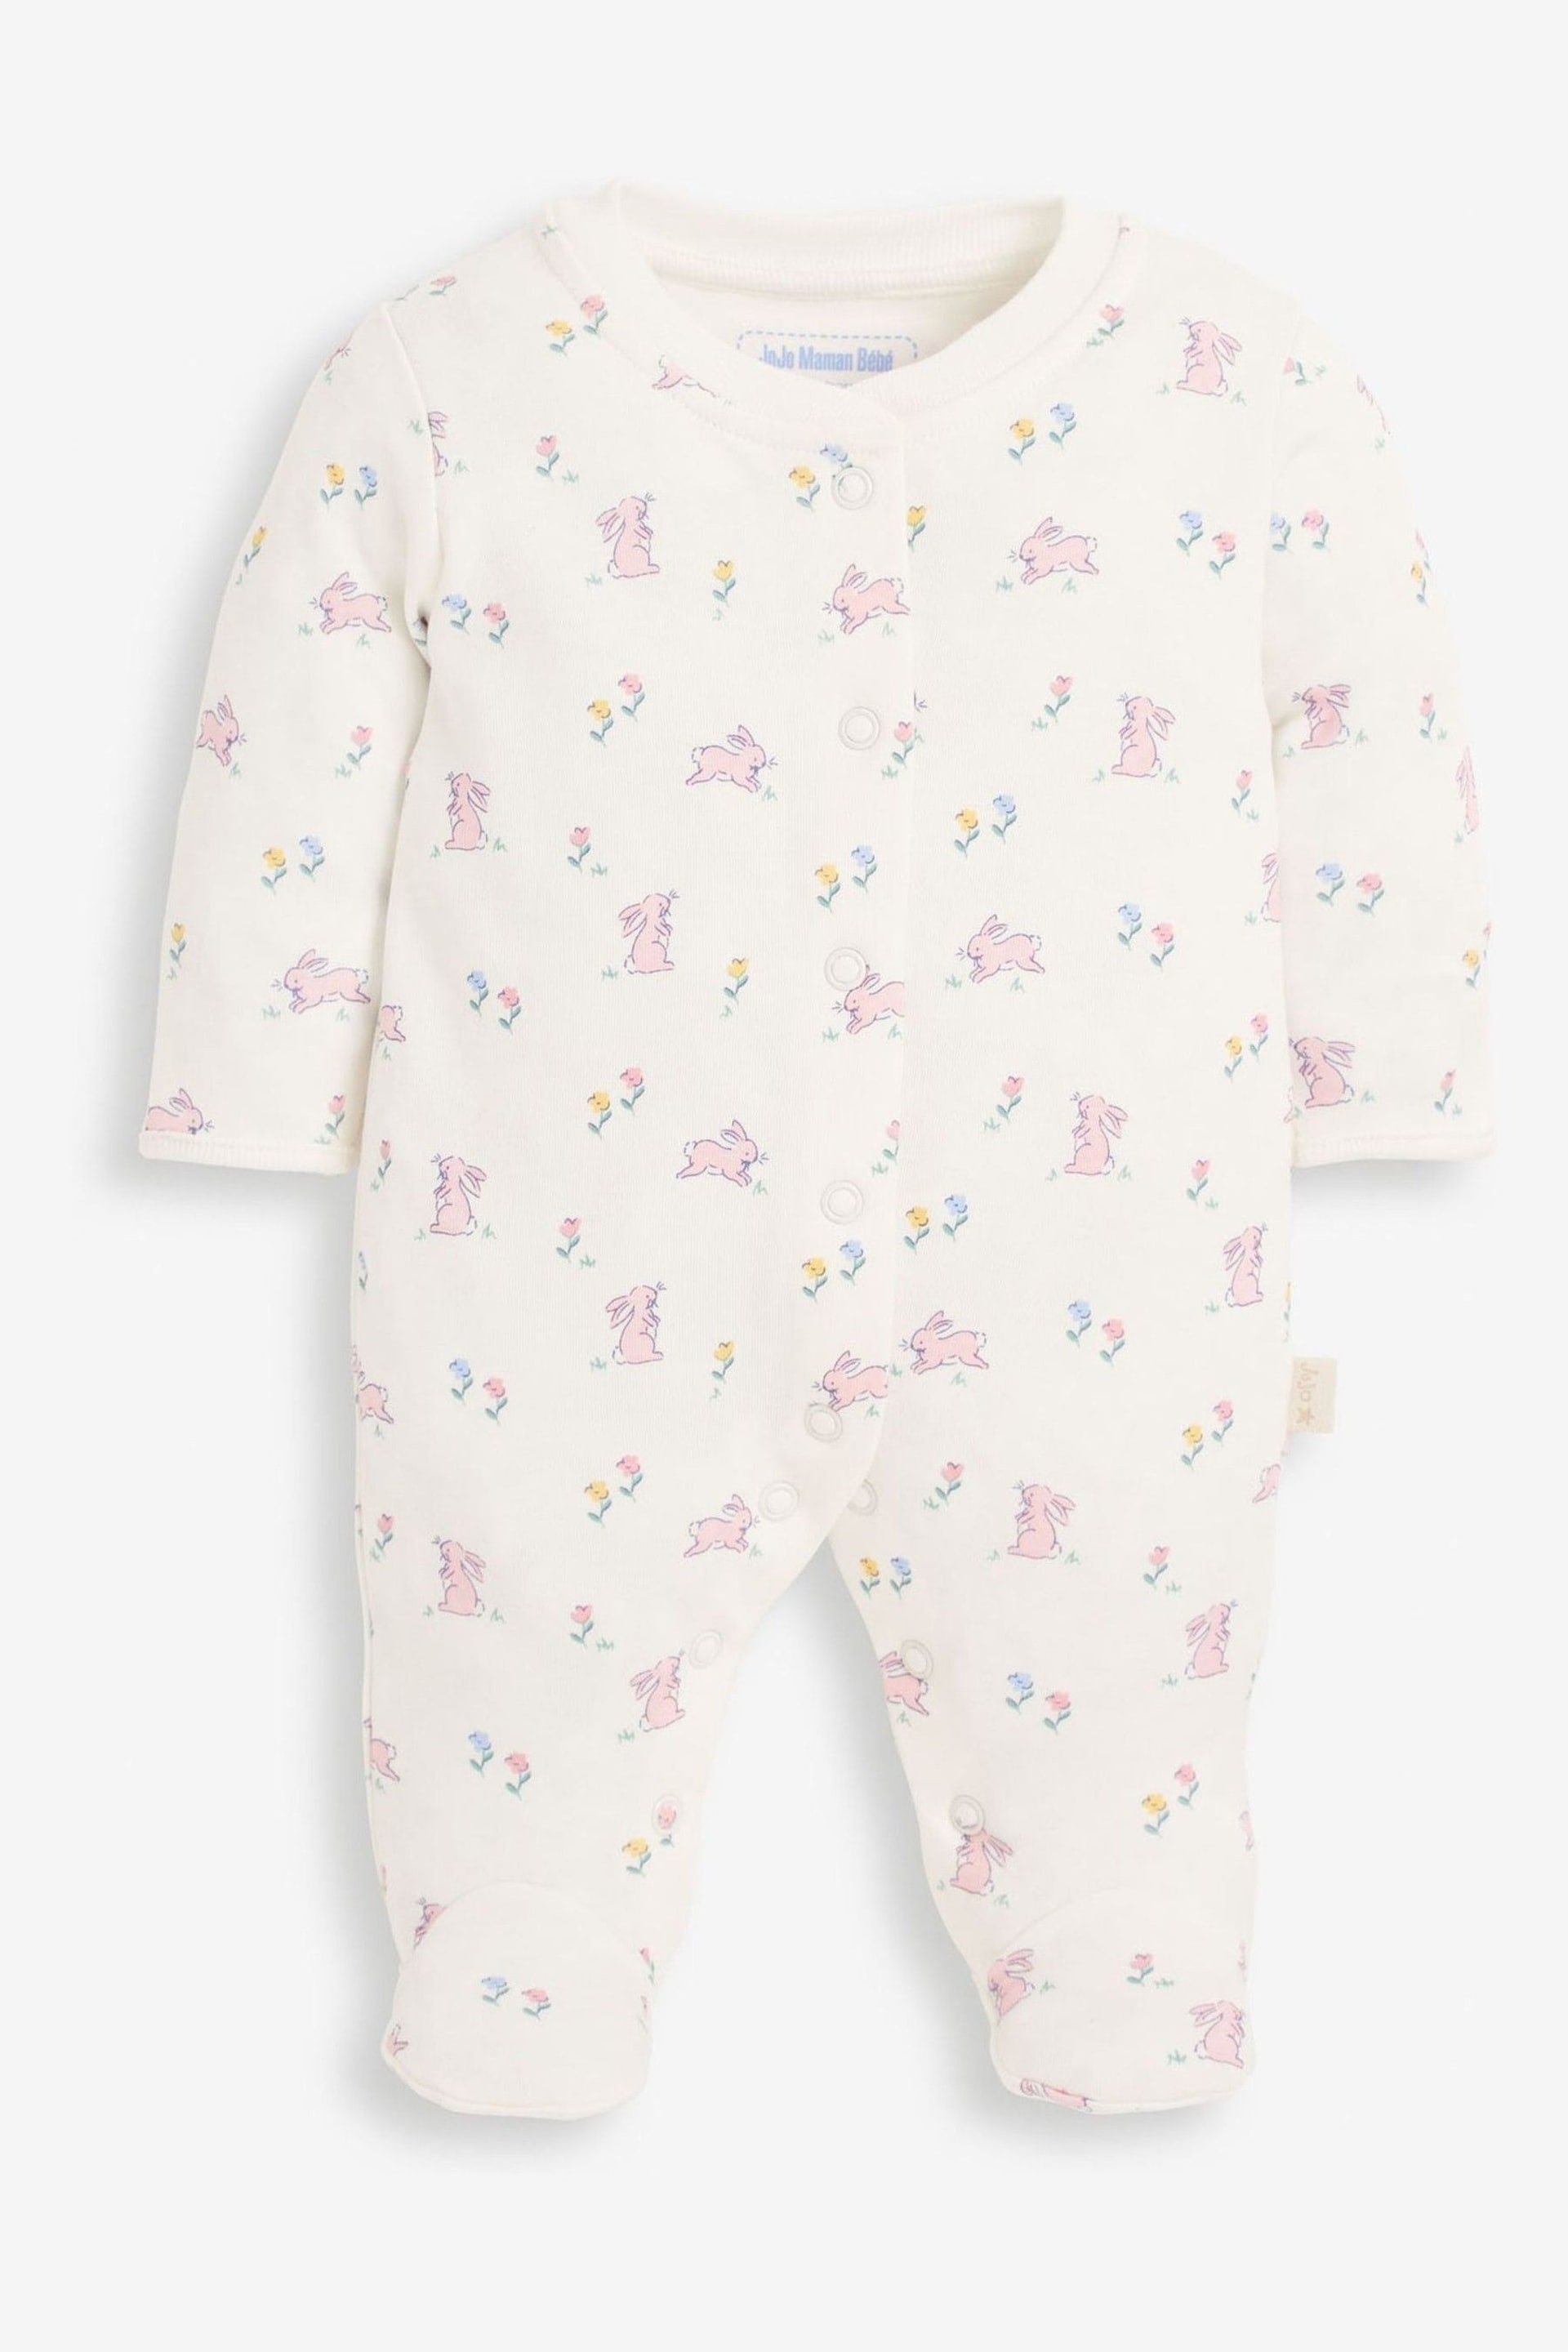 JoJo Maman Bébé Pink 2-Piece Cotton Baby Bunny Sleepsuit & Jacket Set - Image 3 of 5